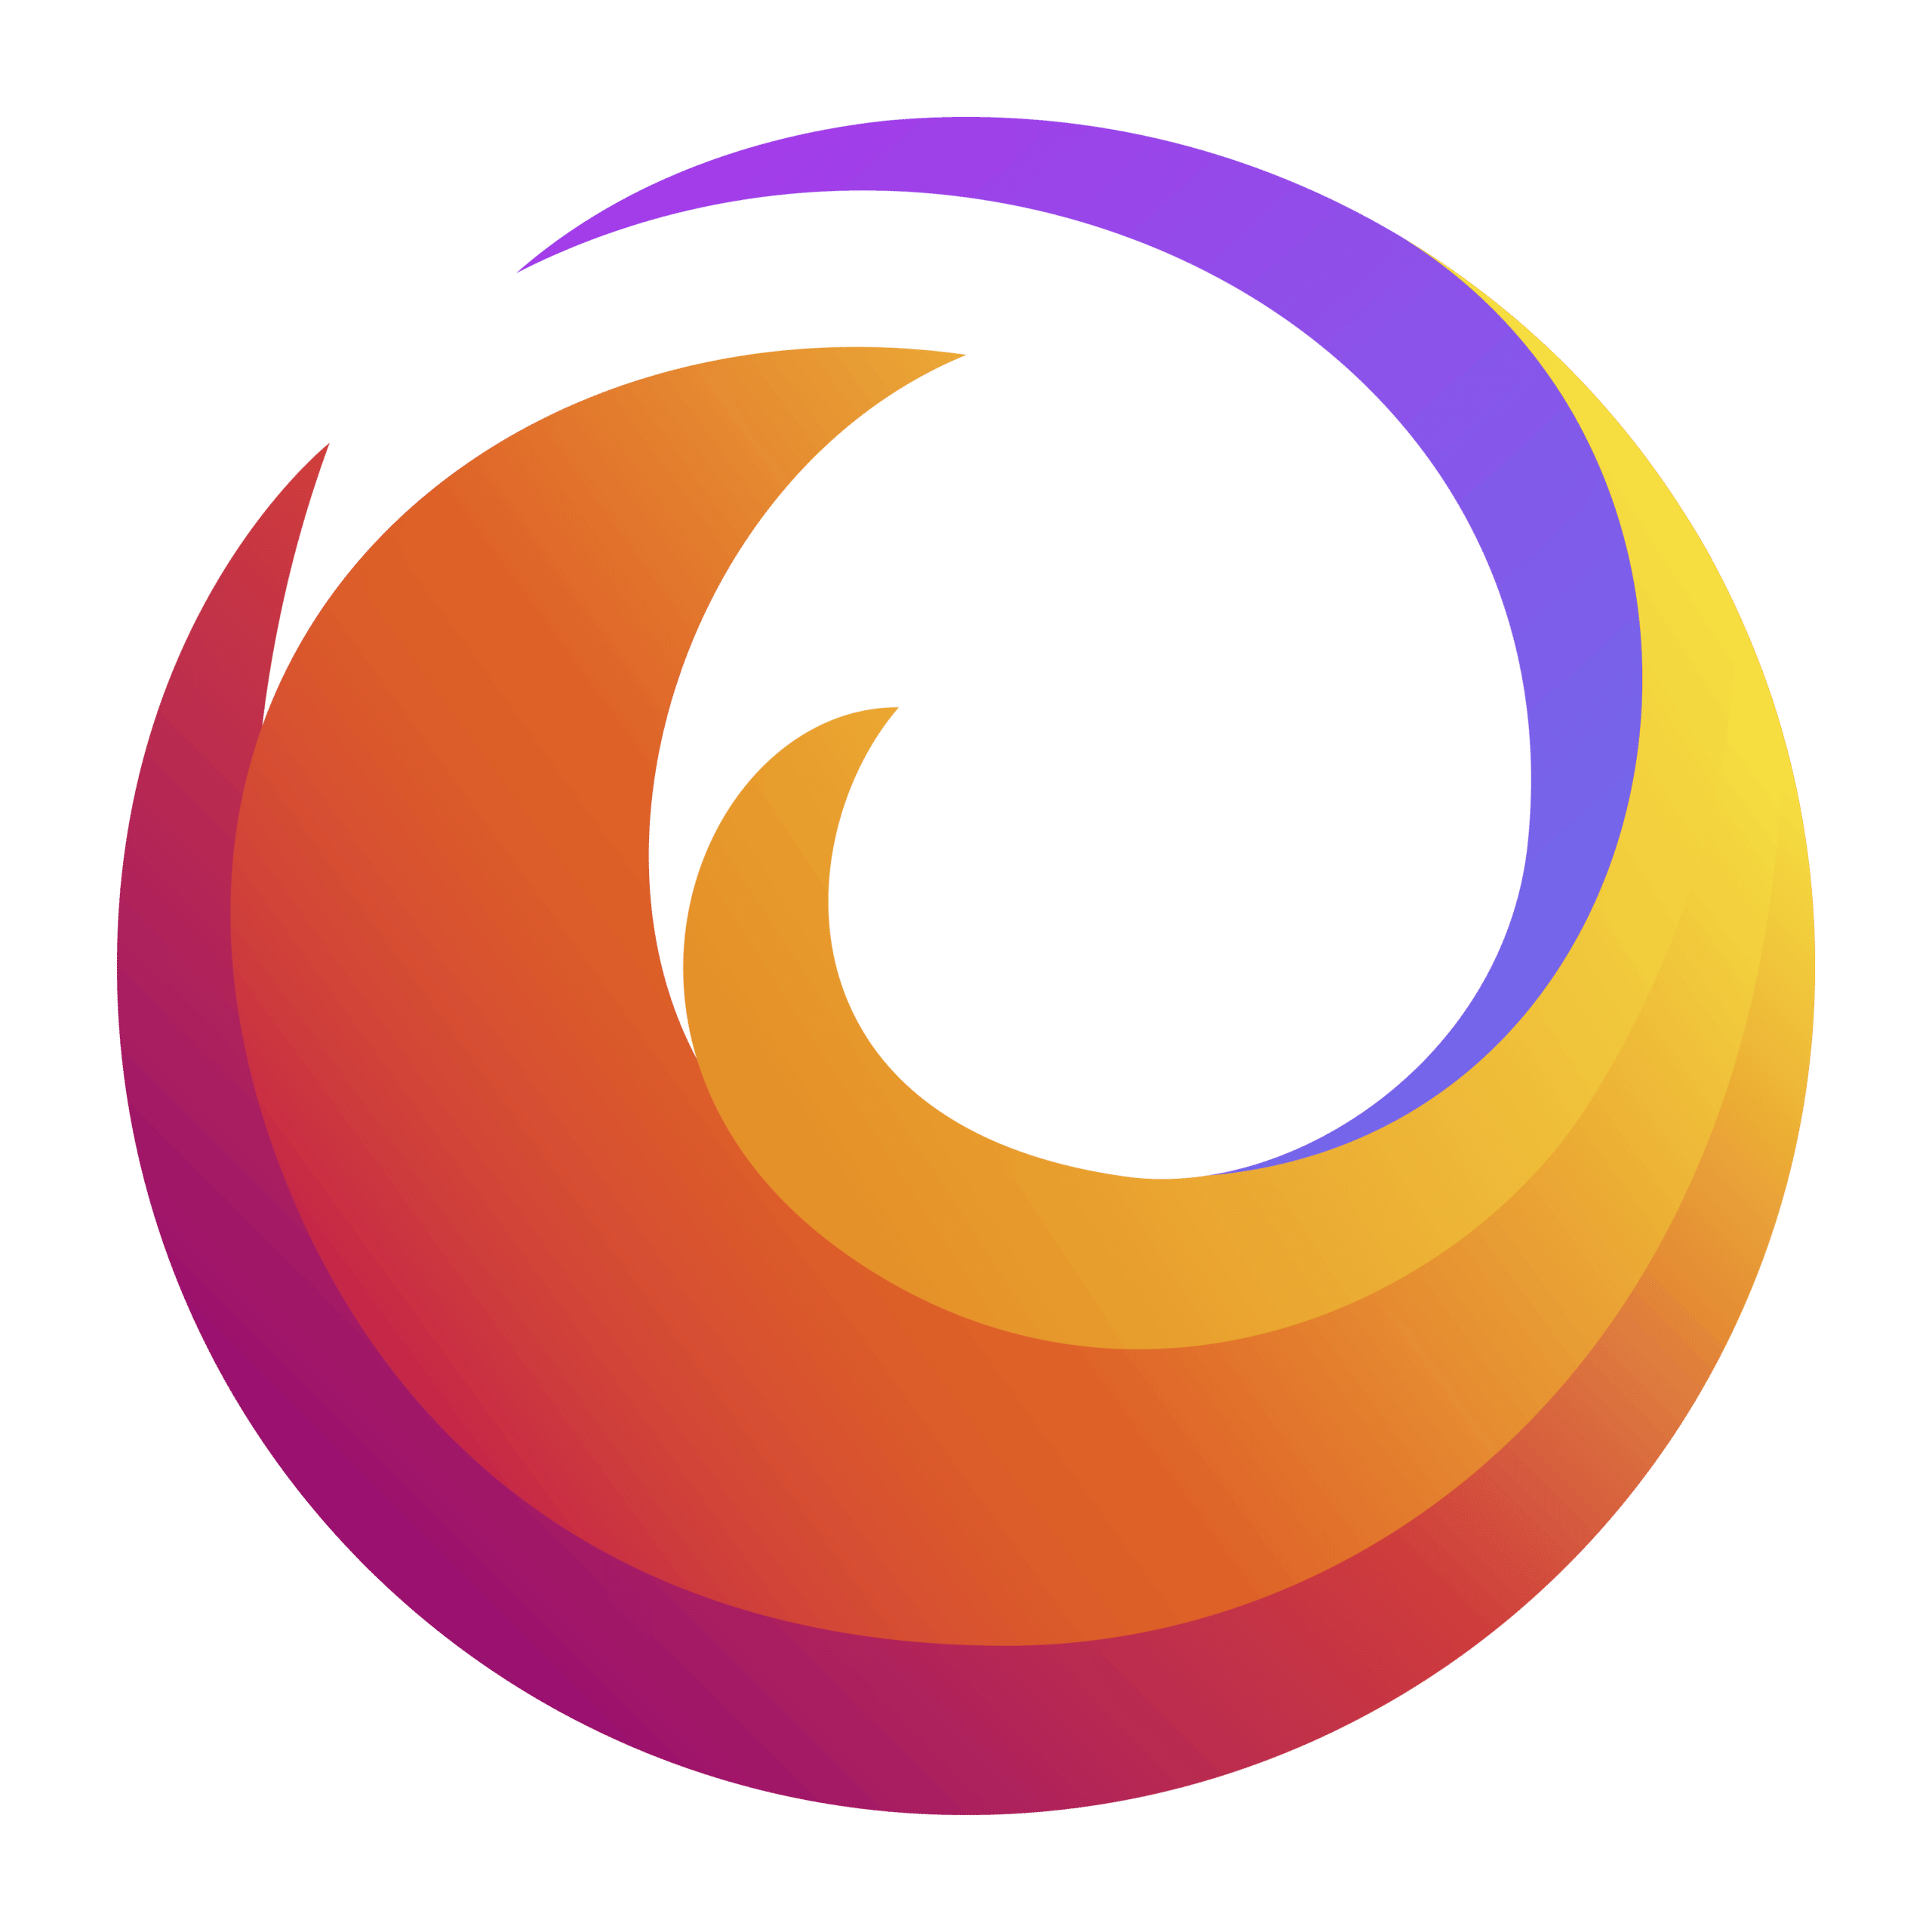 Mozilla busca ajuda no desenvolvimento para Firefox Nightly ARM64 (AArch64) no Linux